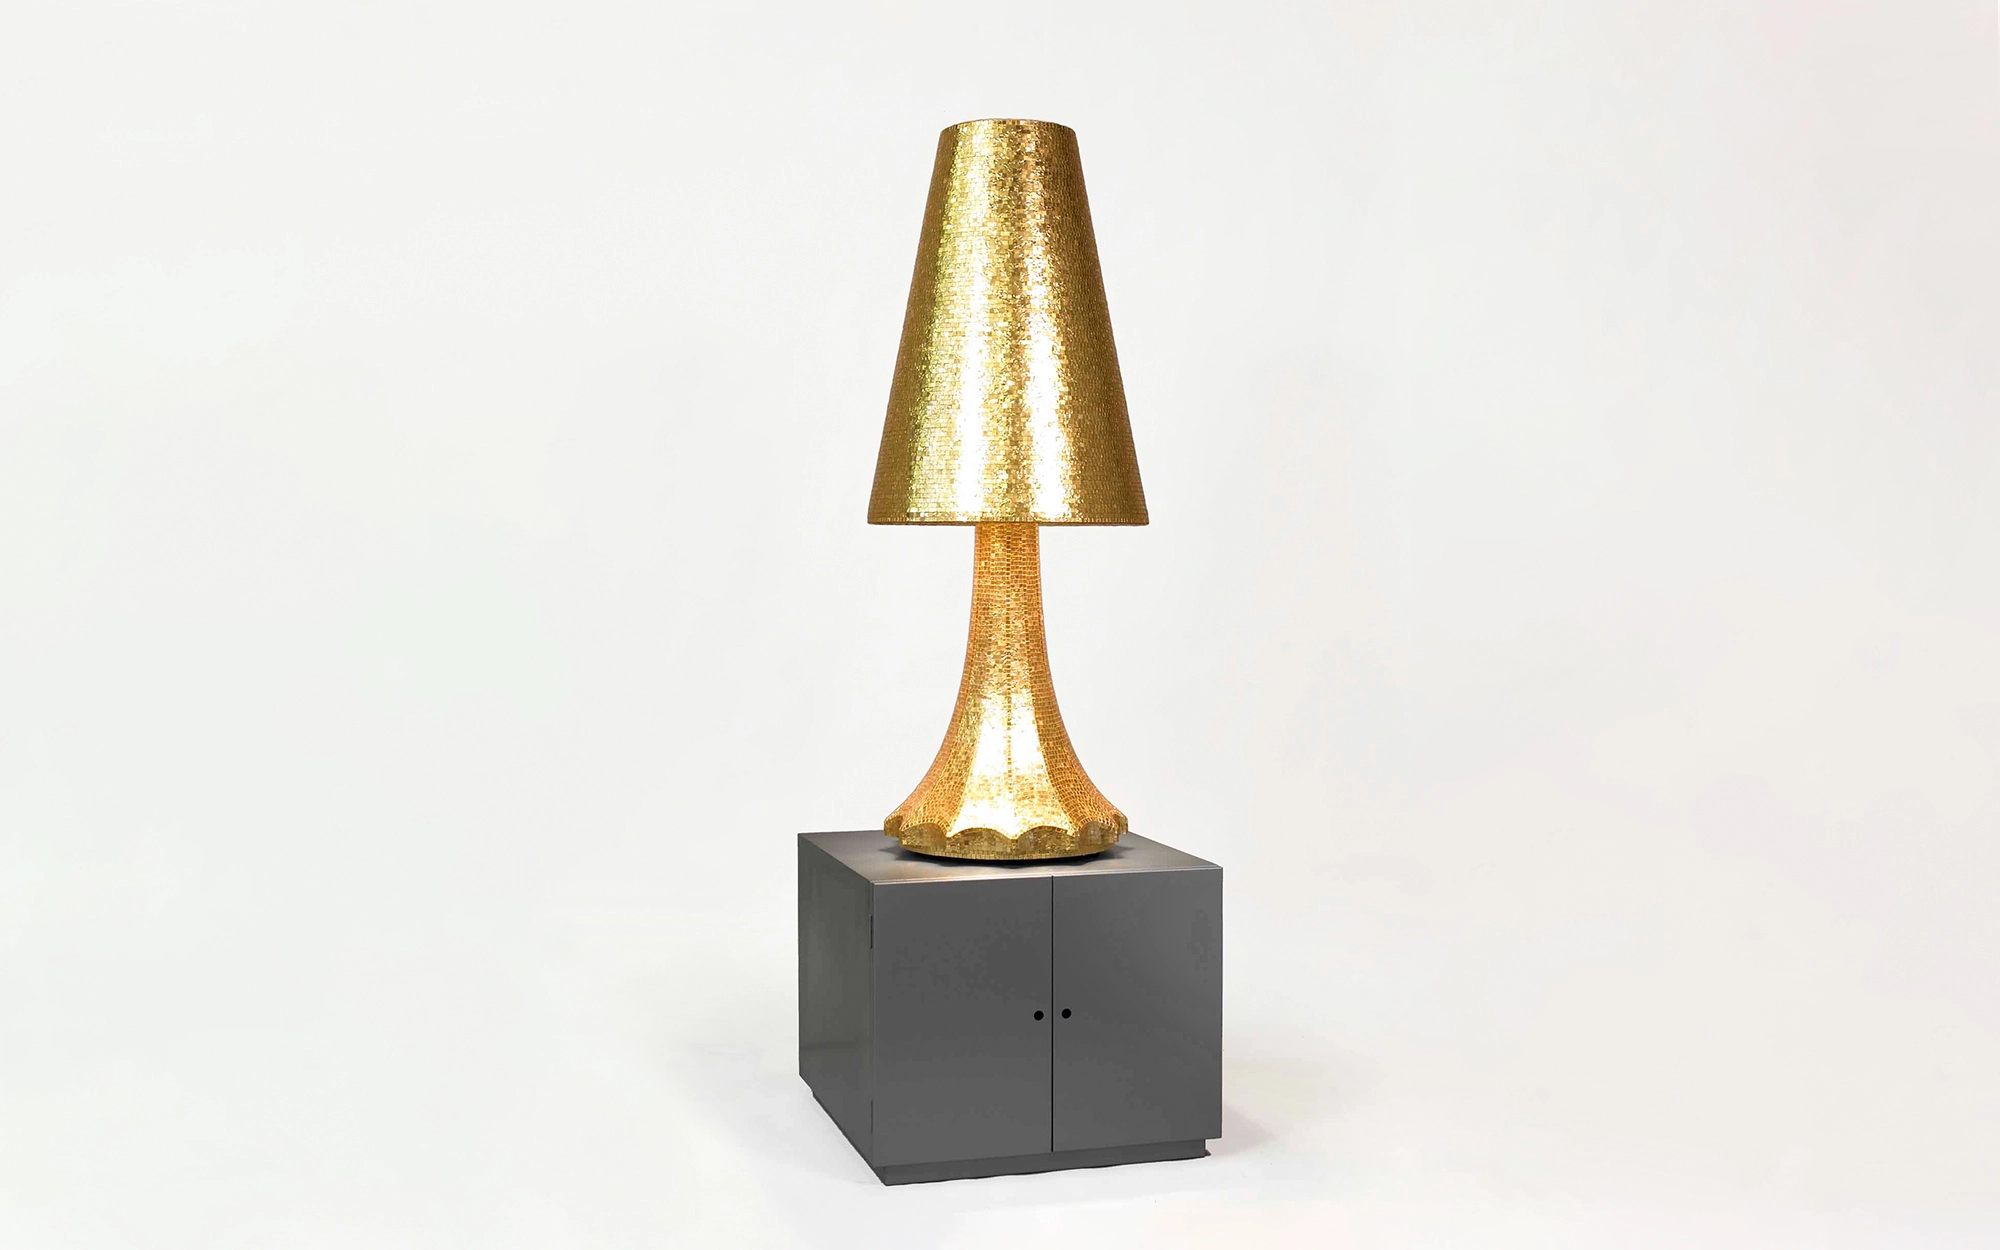 Lampada yellow gold - Alessandro Mendini - Armchair - Galerie kreo